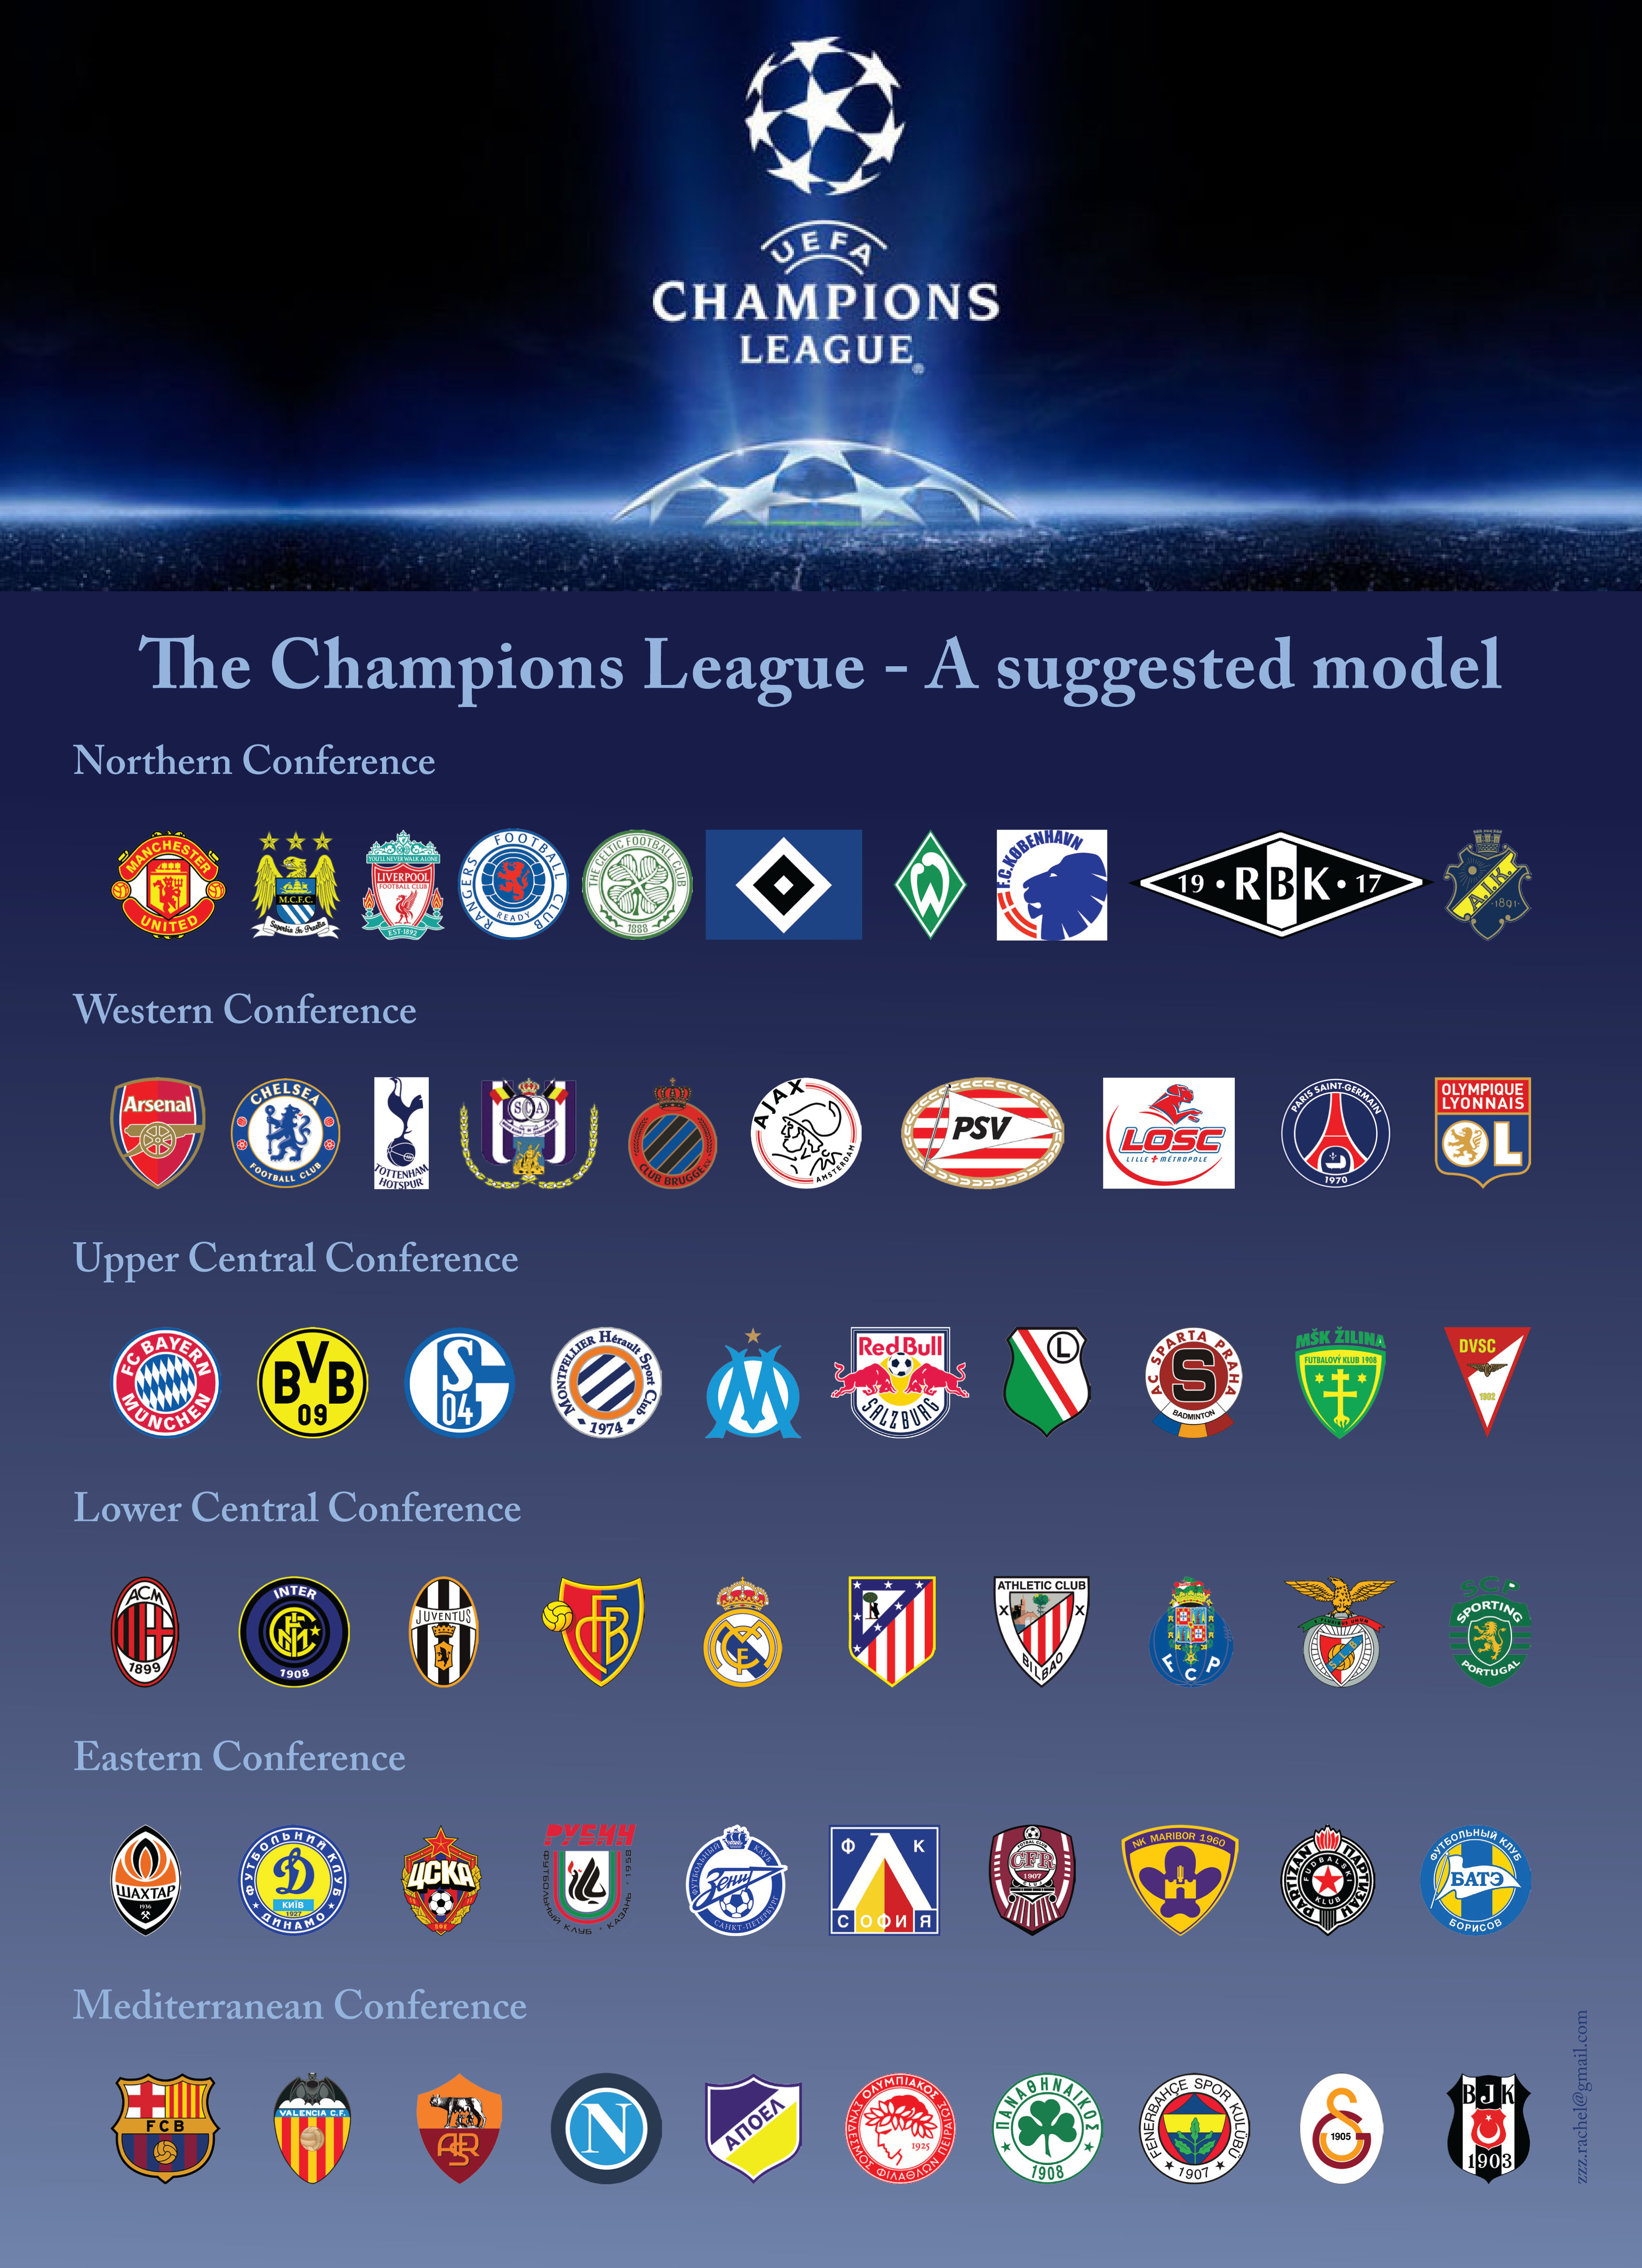 uefa champions league qualification